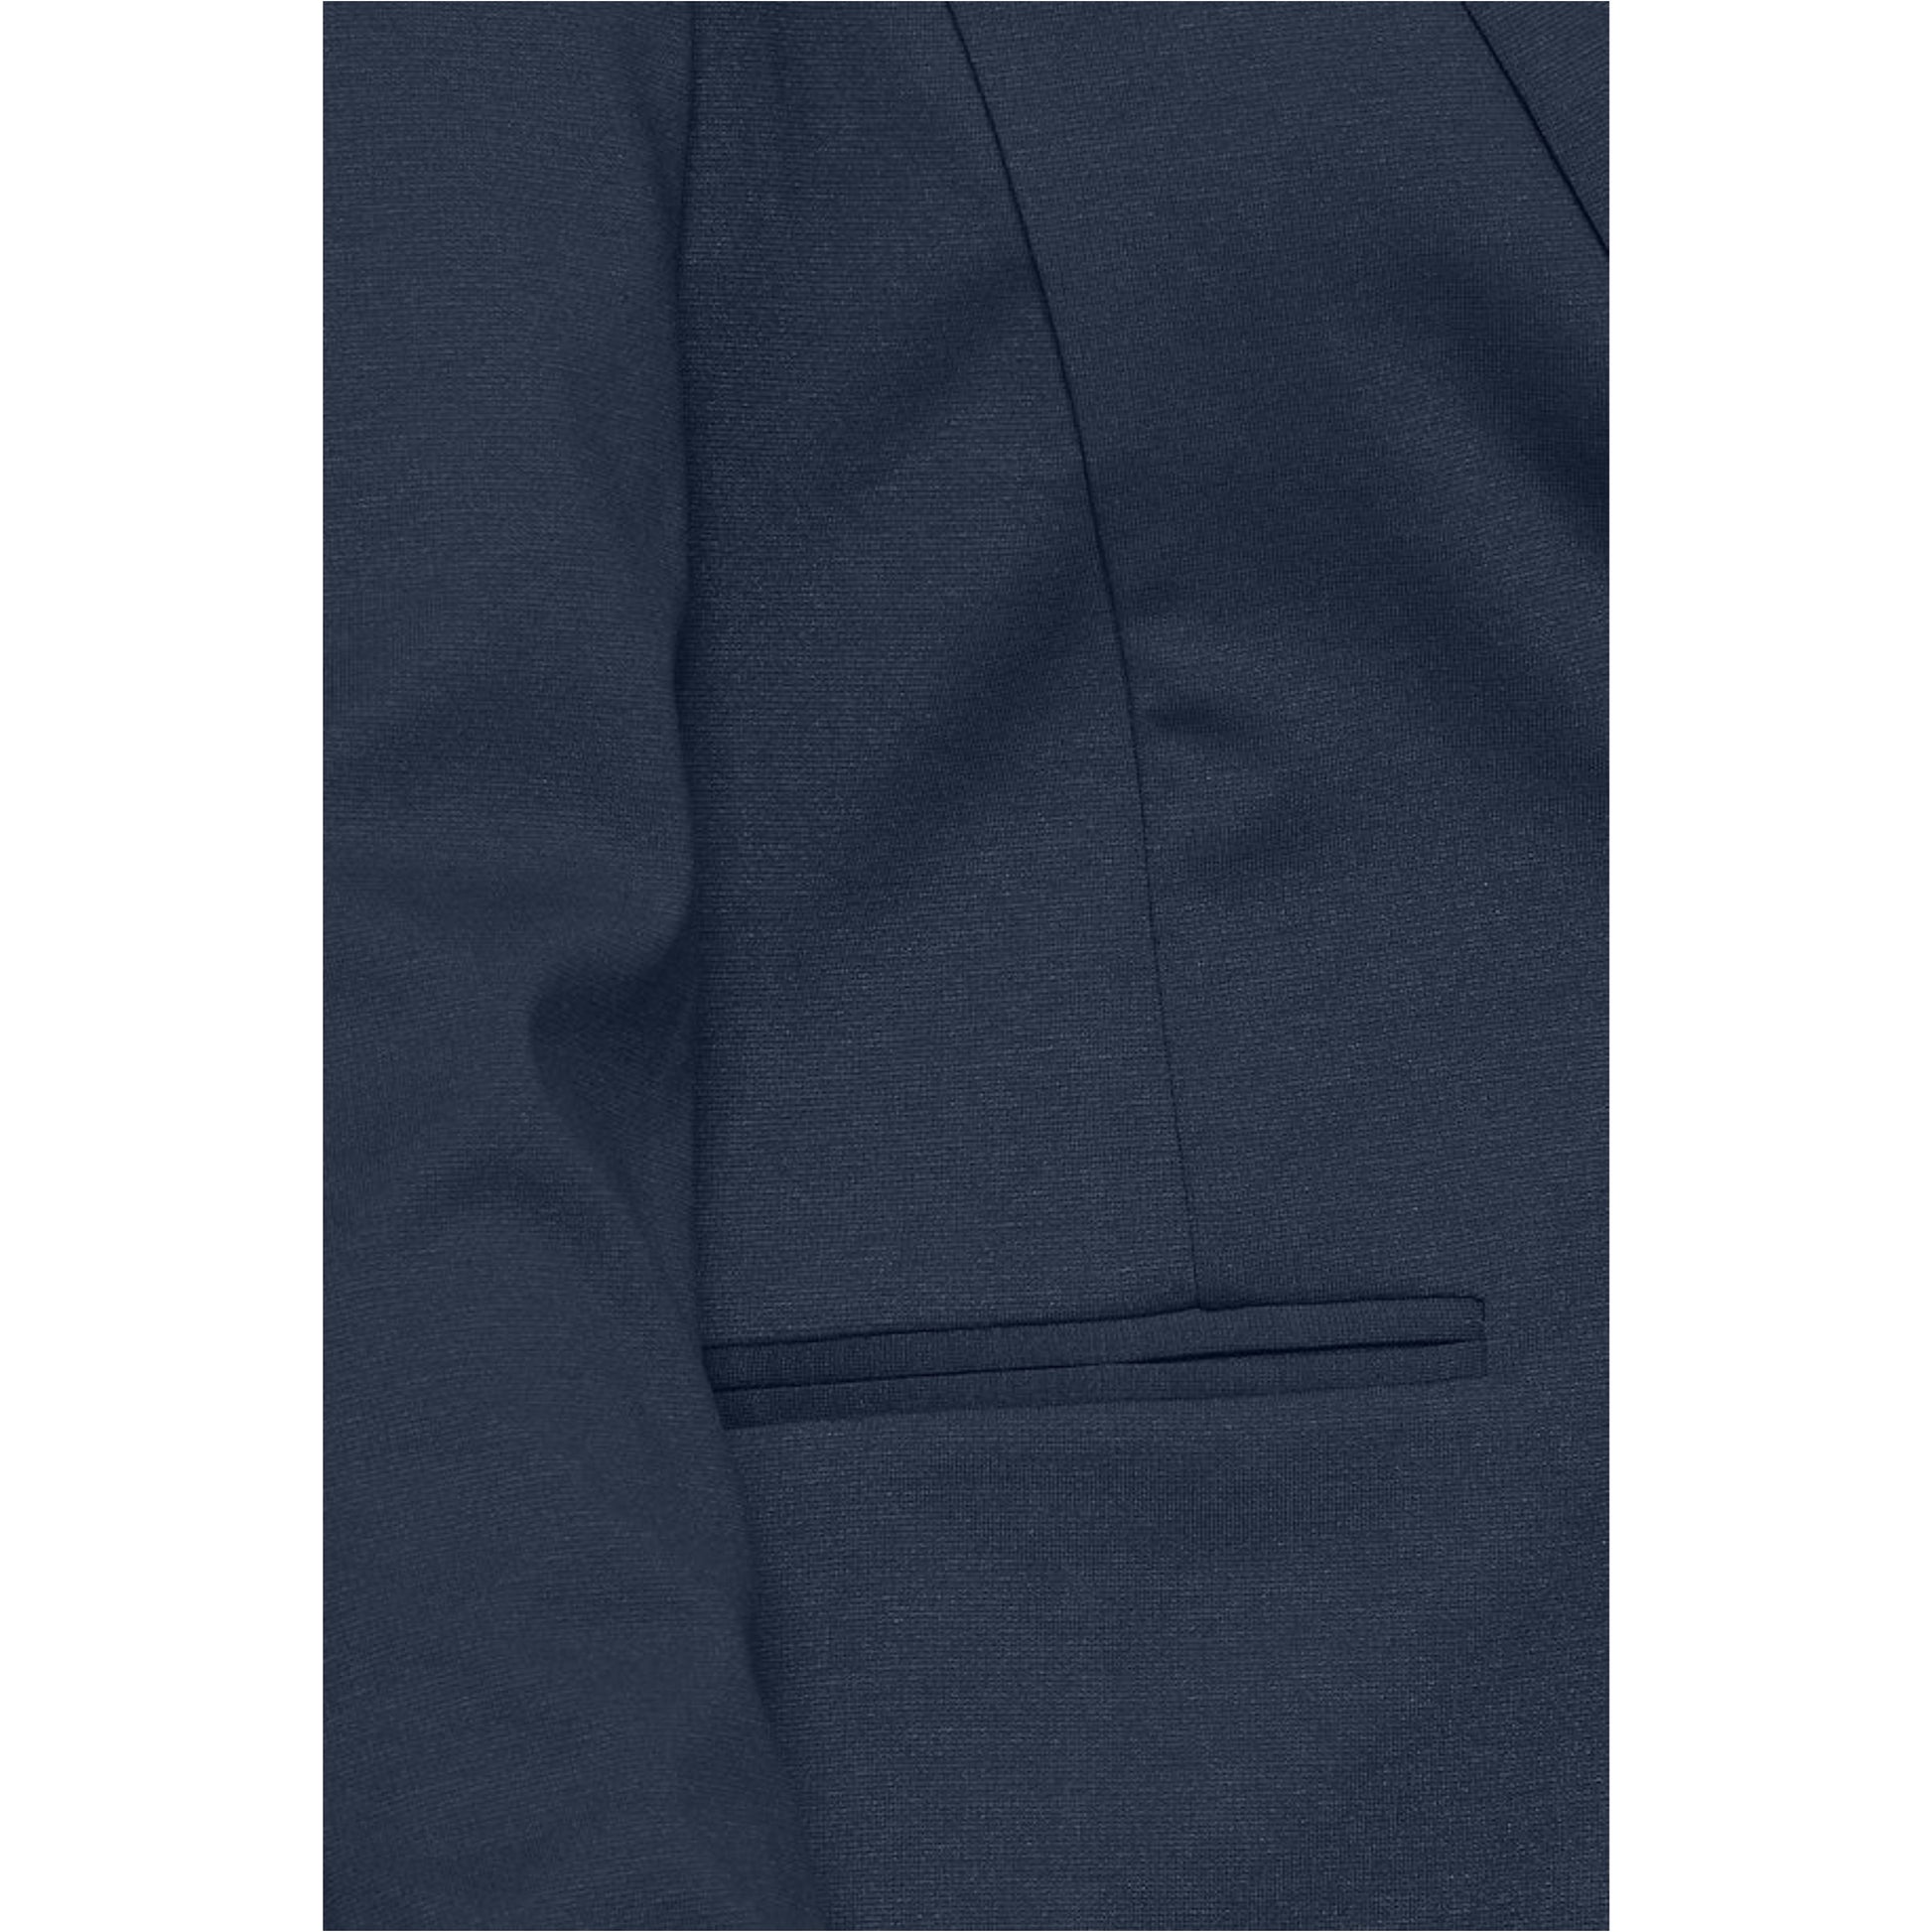 Ichi Kate Blazer Total Navy - Peet kleding